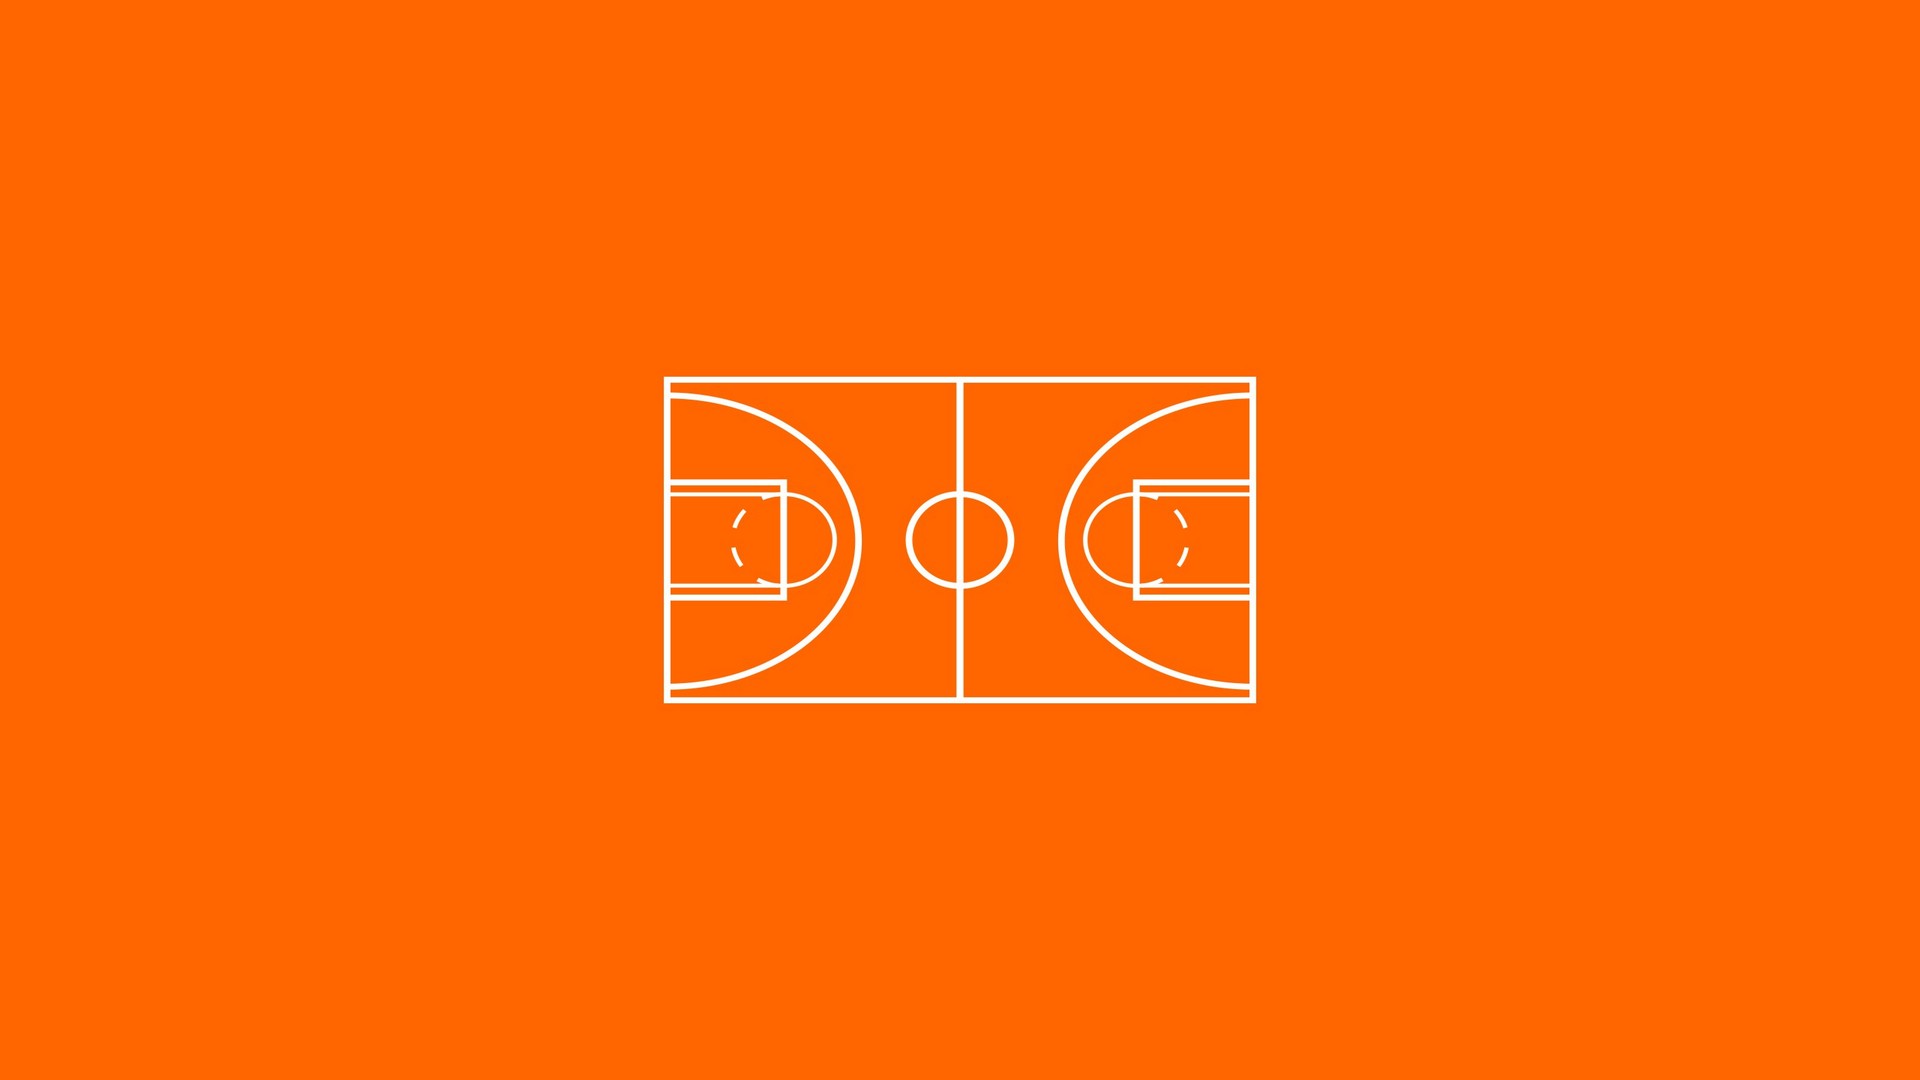 General 1920x1080 minimalism simple background orange orange background basketball basketball court sport